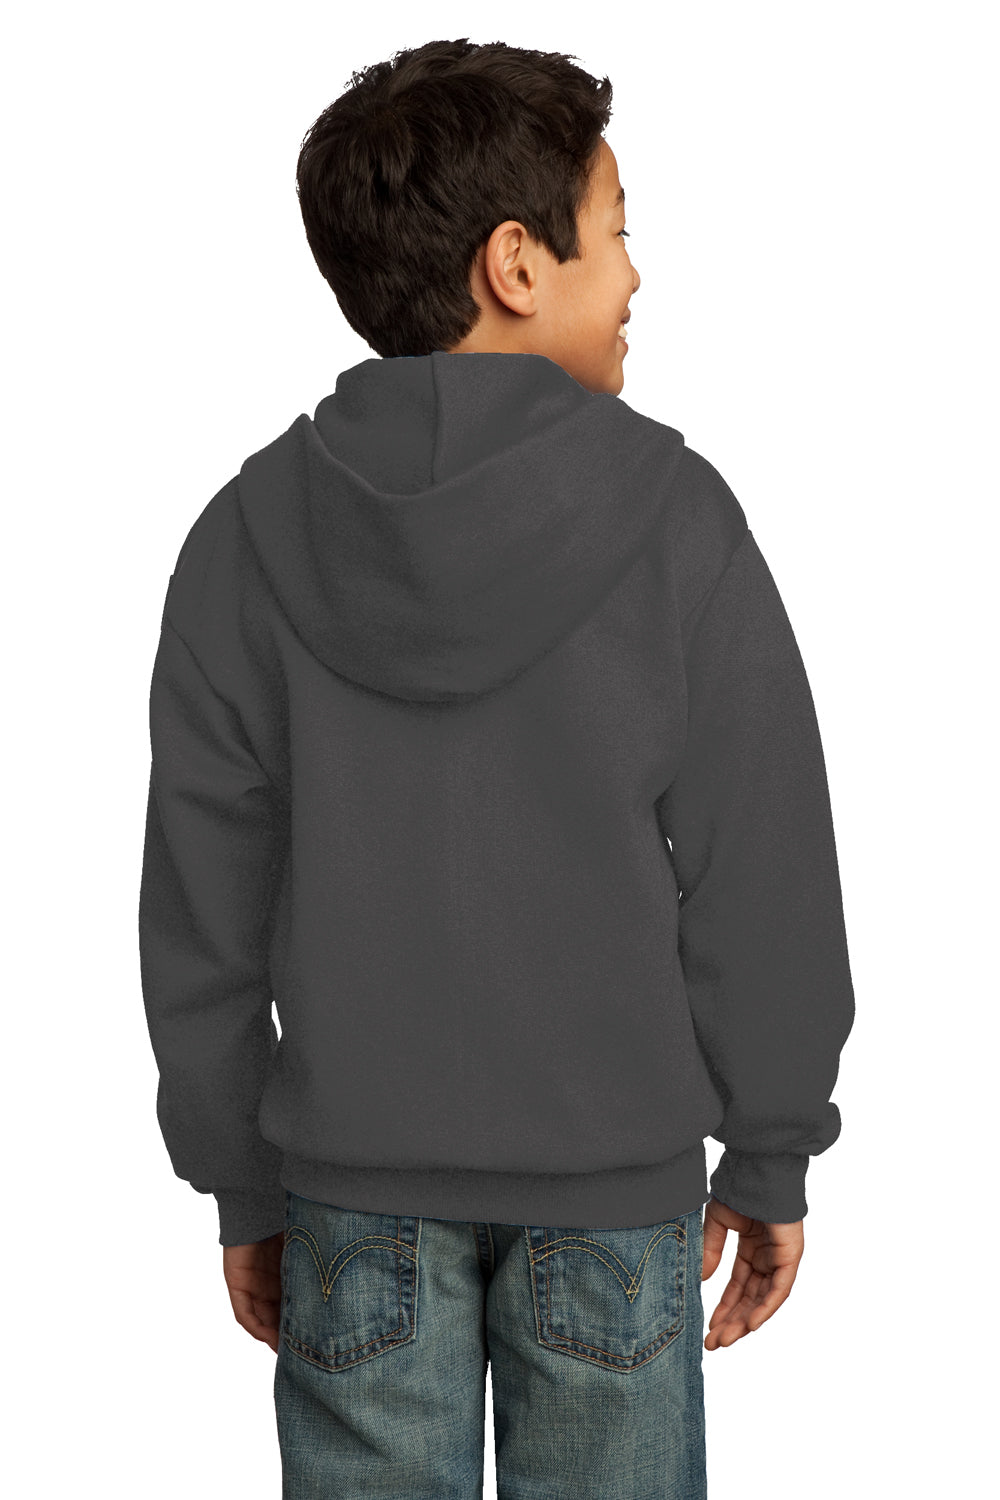 Port & Company PC90YZH Youth Core Fleece Full Zip Hooded Sweatshirt Hoodie Charcoal Grey Back